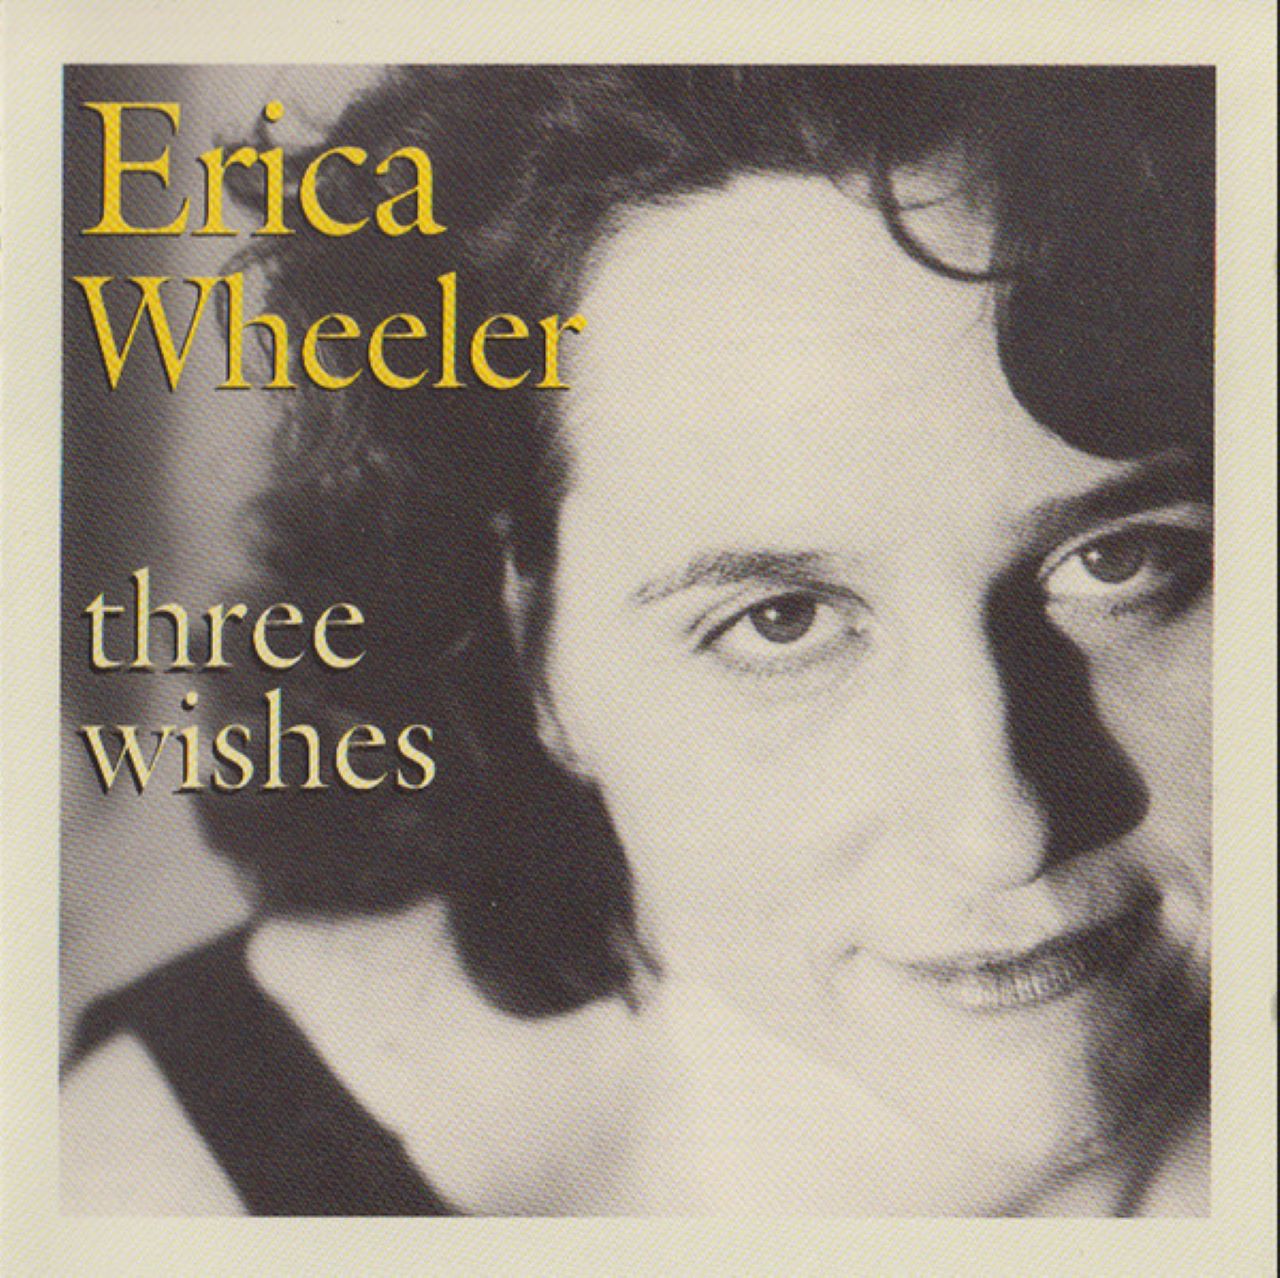 Erica Wheeler - Three Wishes cover album